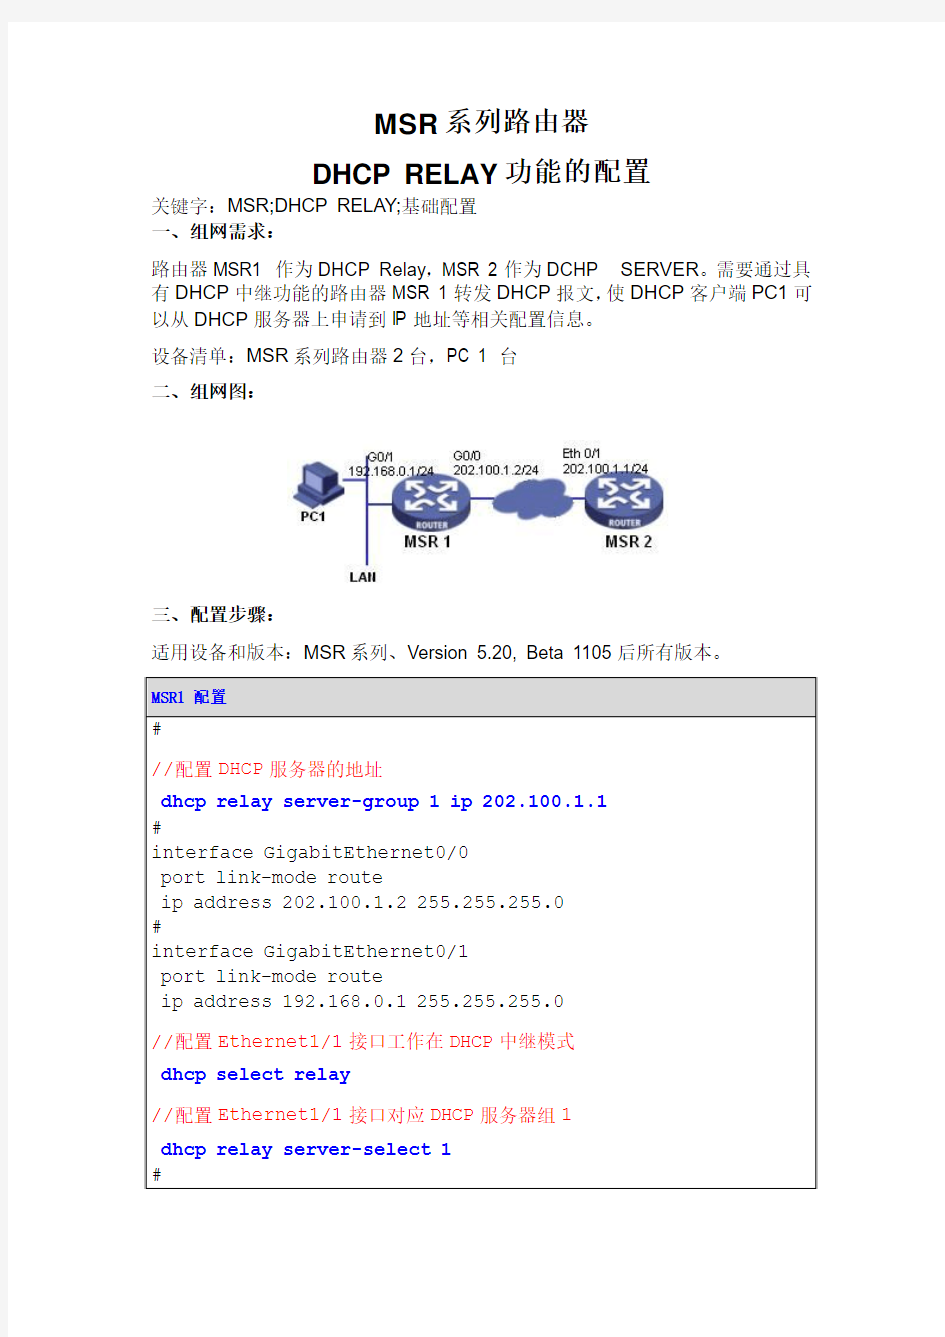 MSR系列路由器DHCP RELAY功能的配置